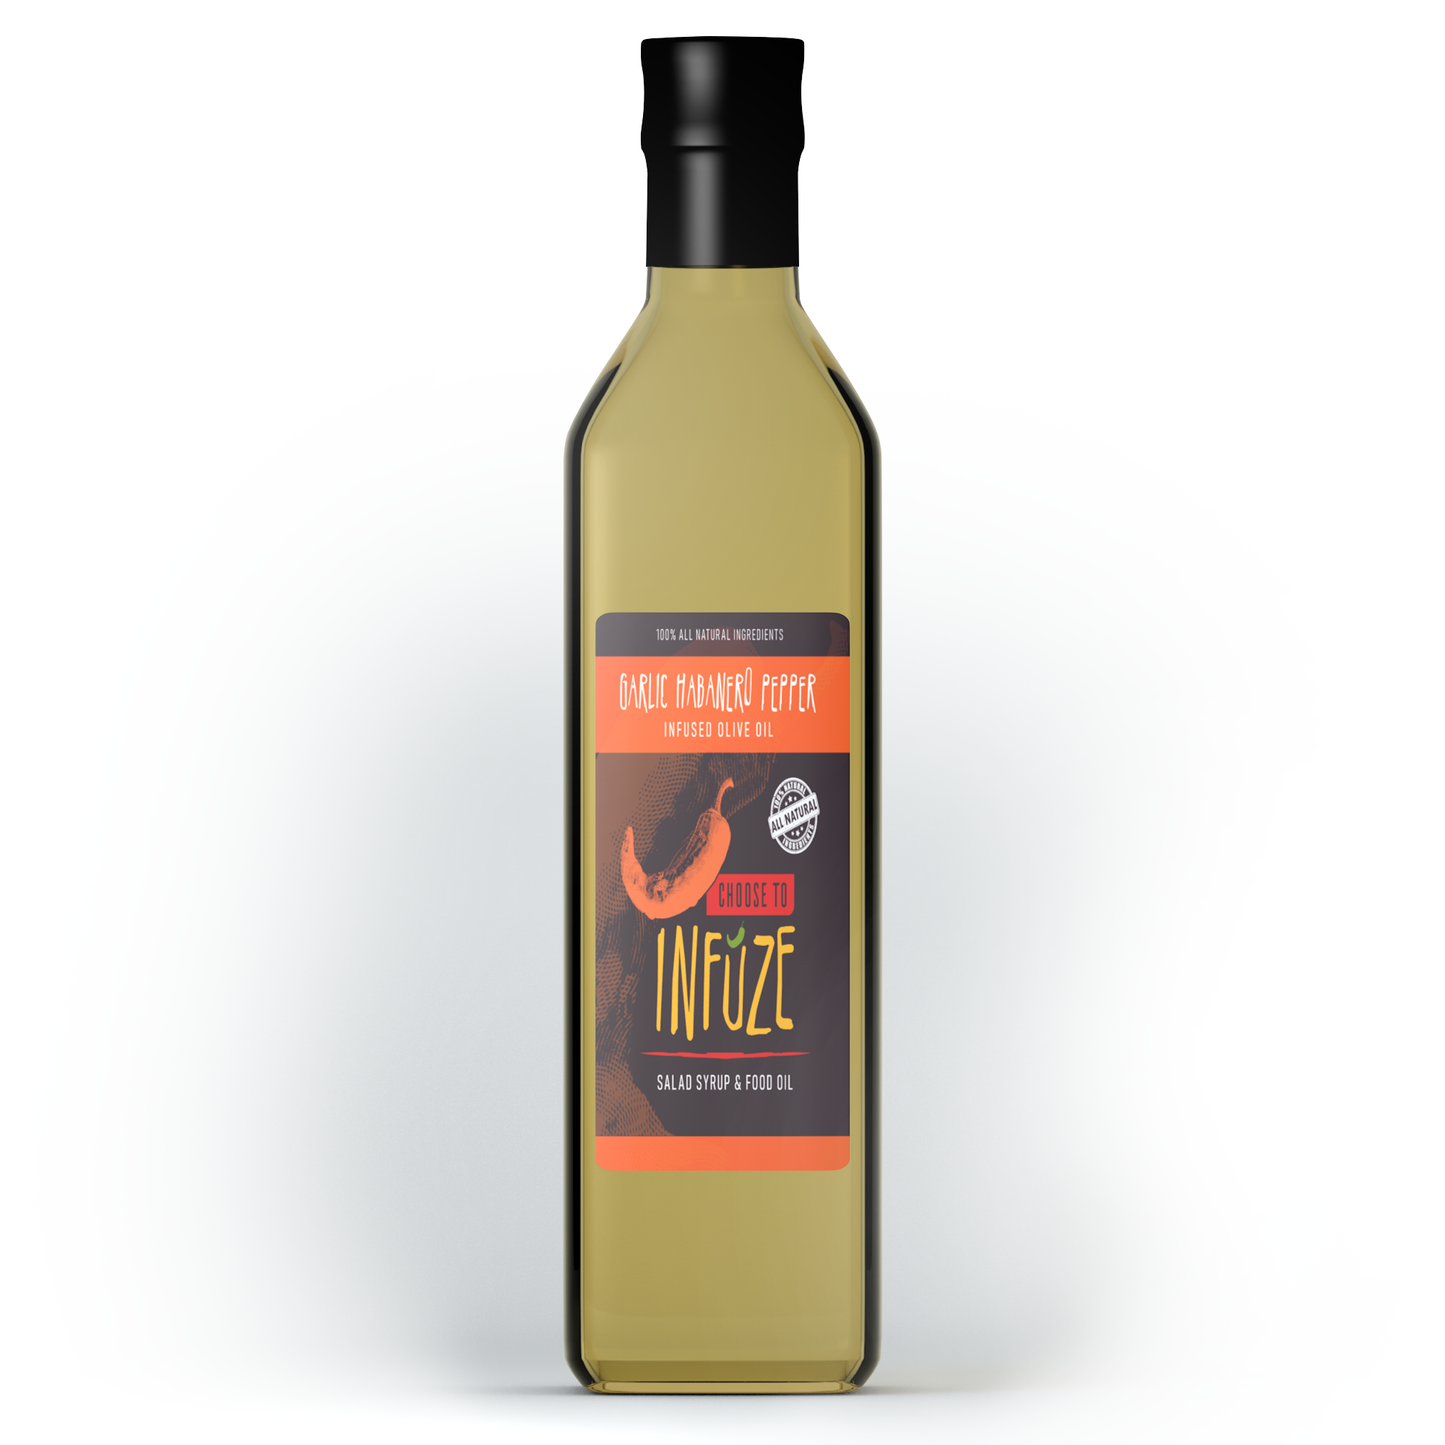 Garlic Habanero Infused Olive Oil 250 ml (8.5 oz)